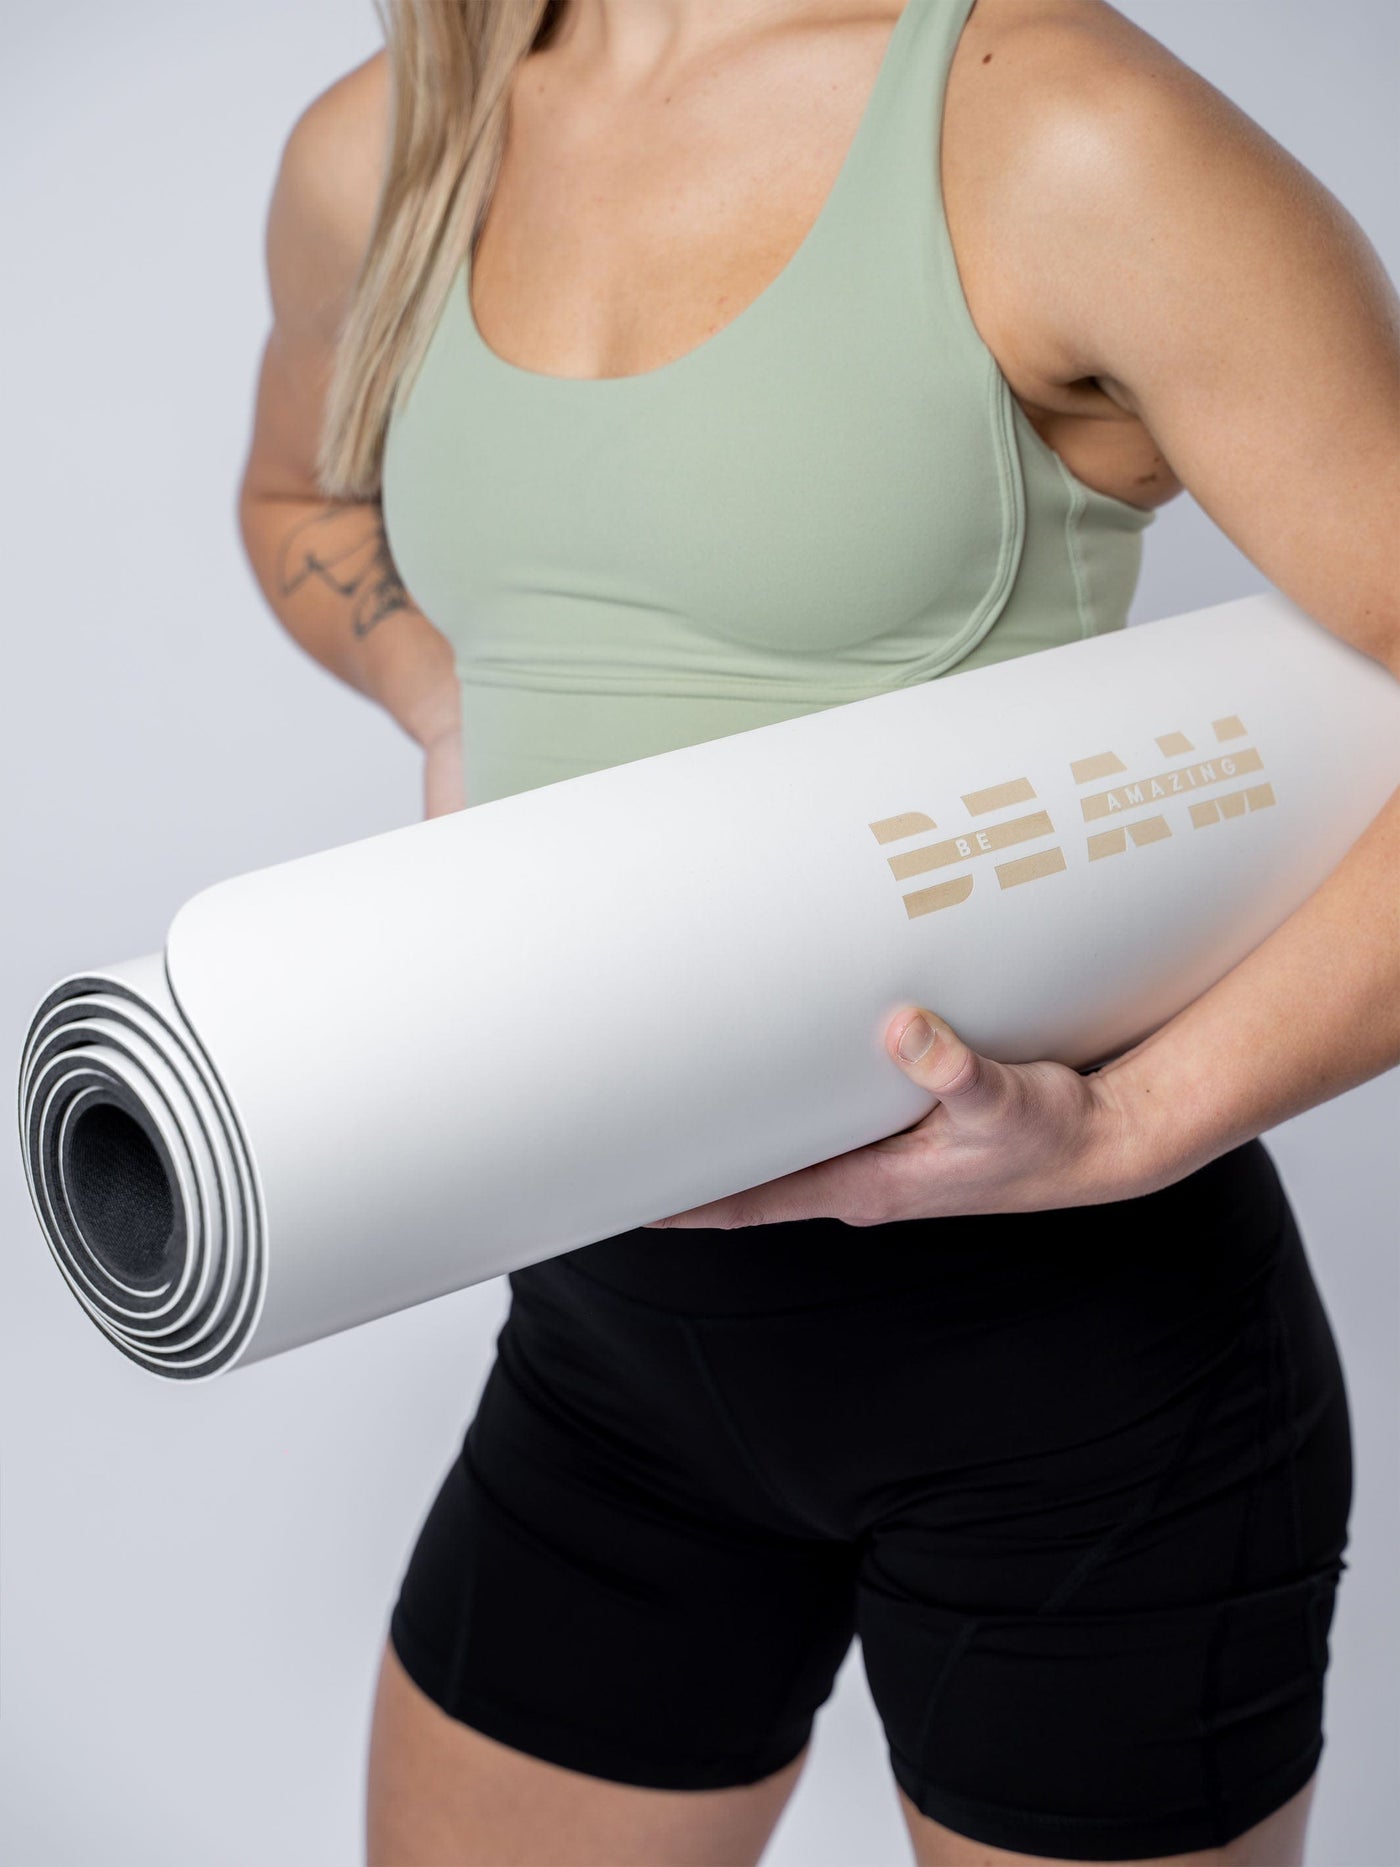 Wellday 173X61 Thickening Yoga Mats For Workout Men Women Fitness